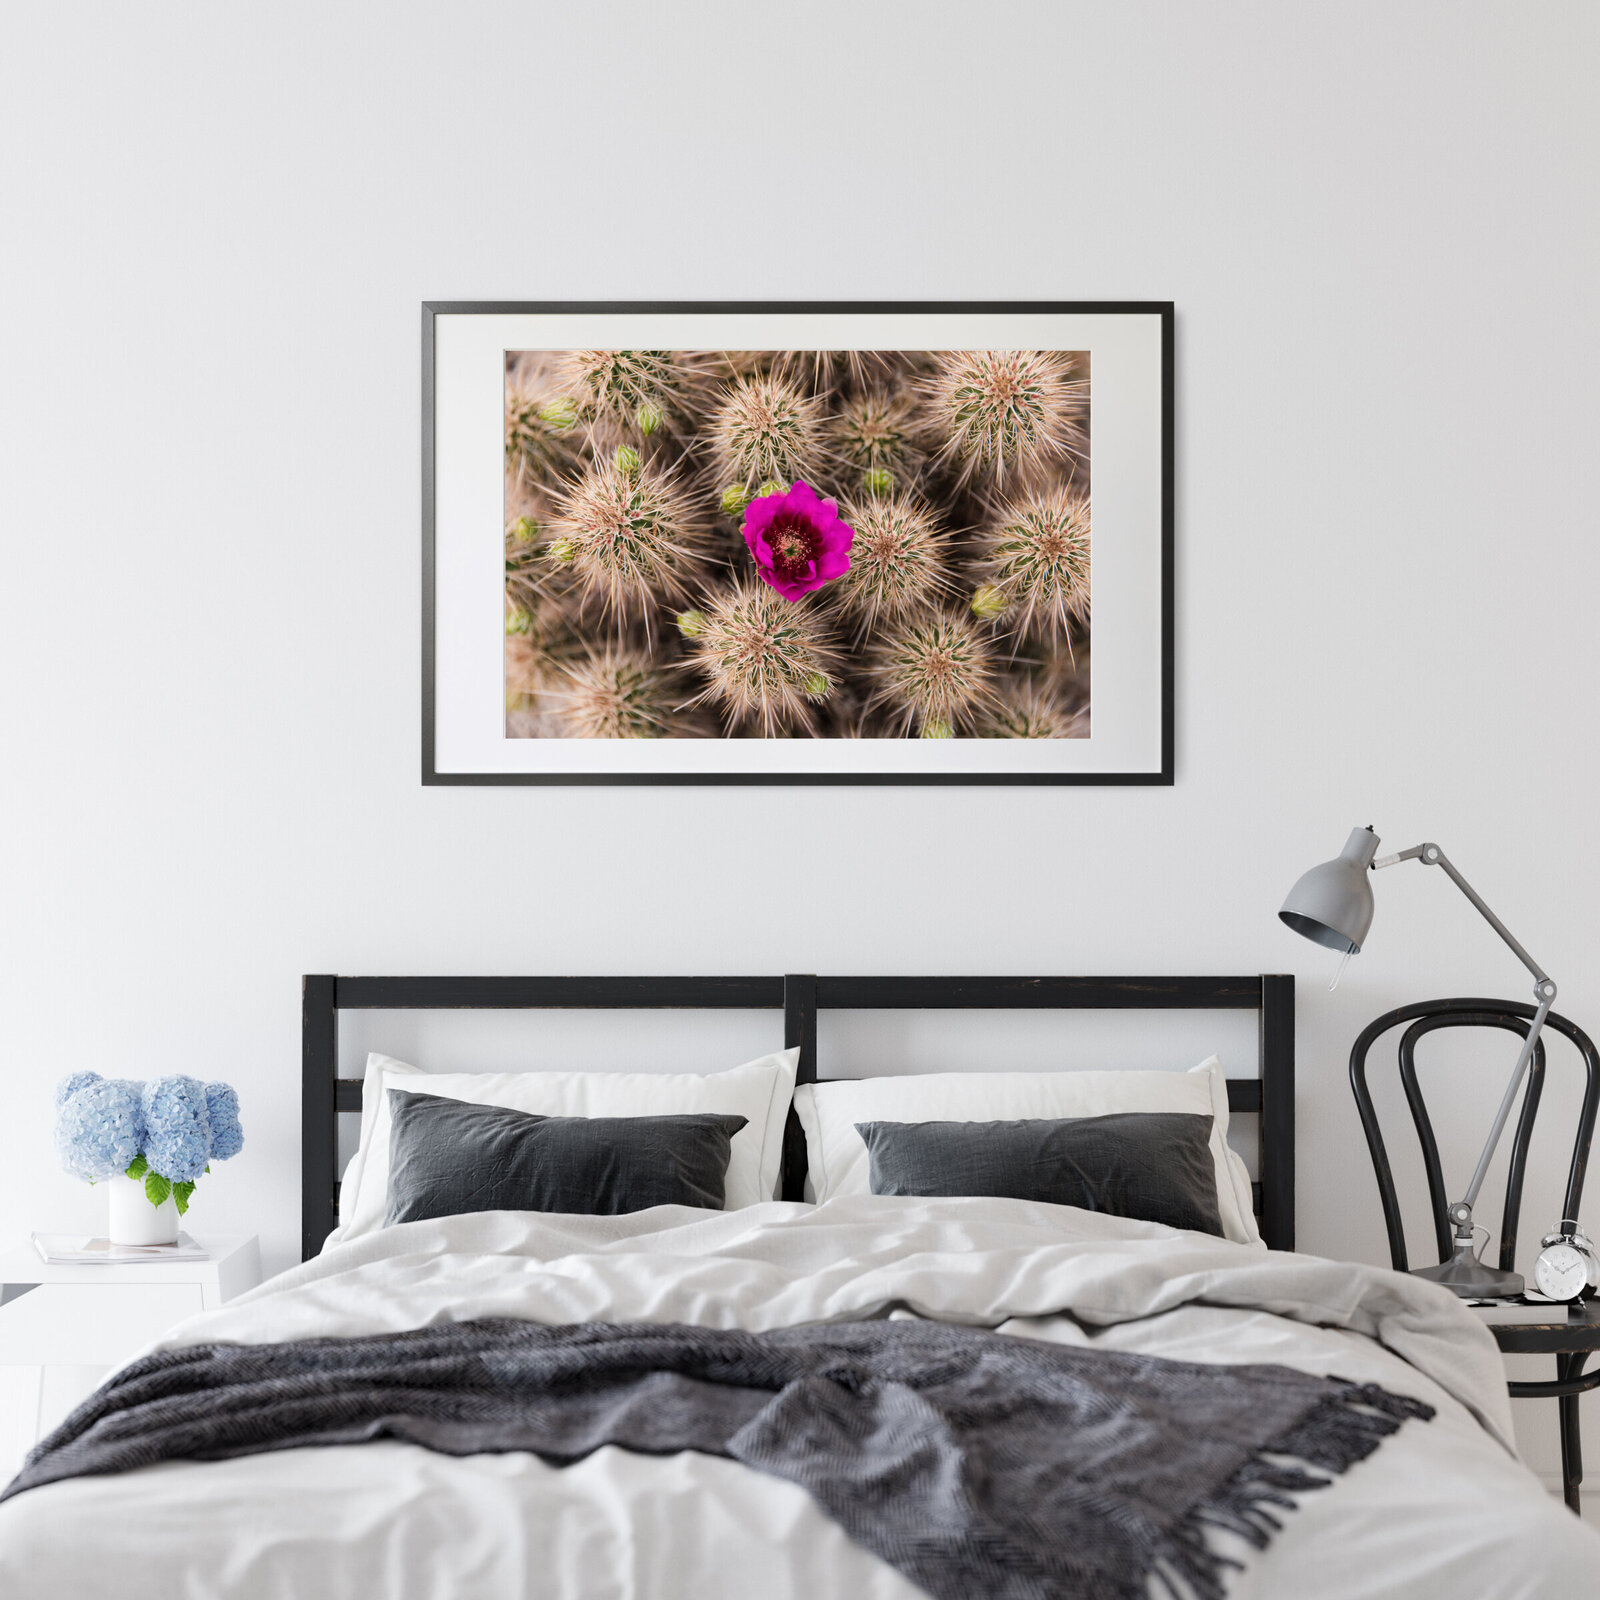 Arizona cactus with flower home decor print for bedroom